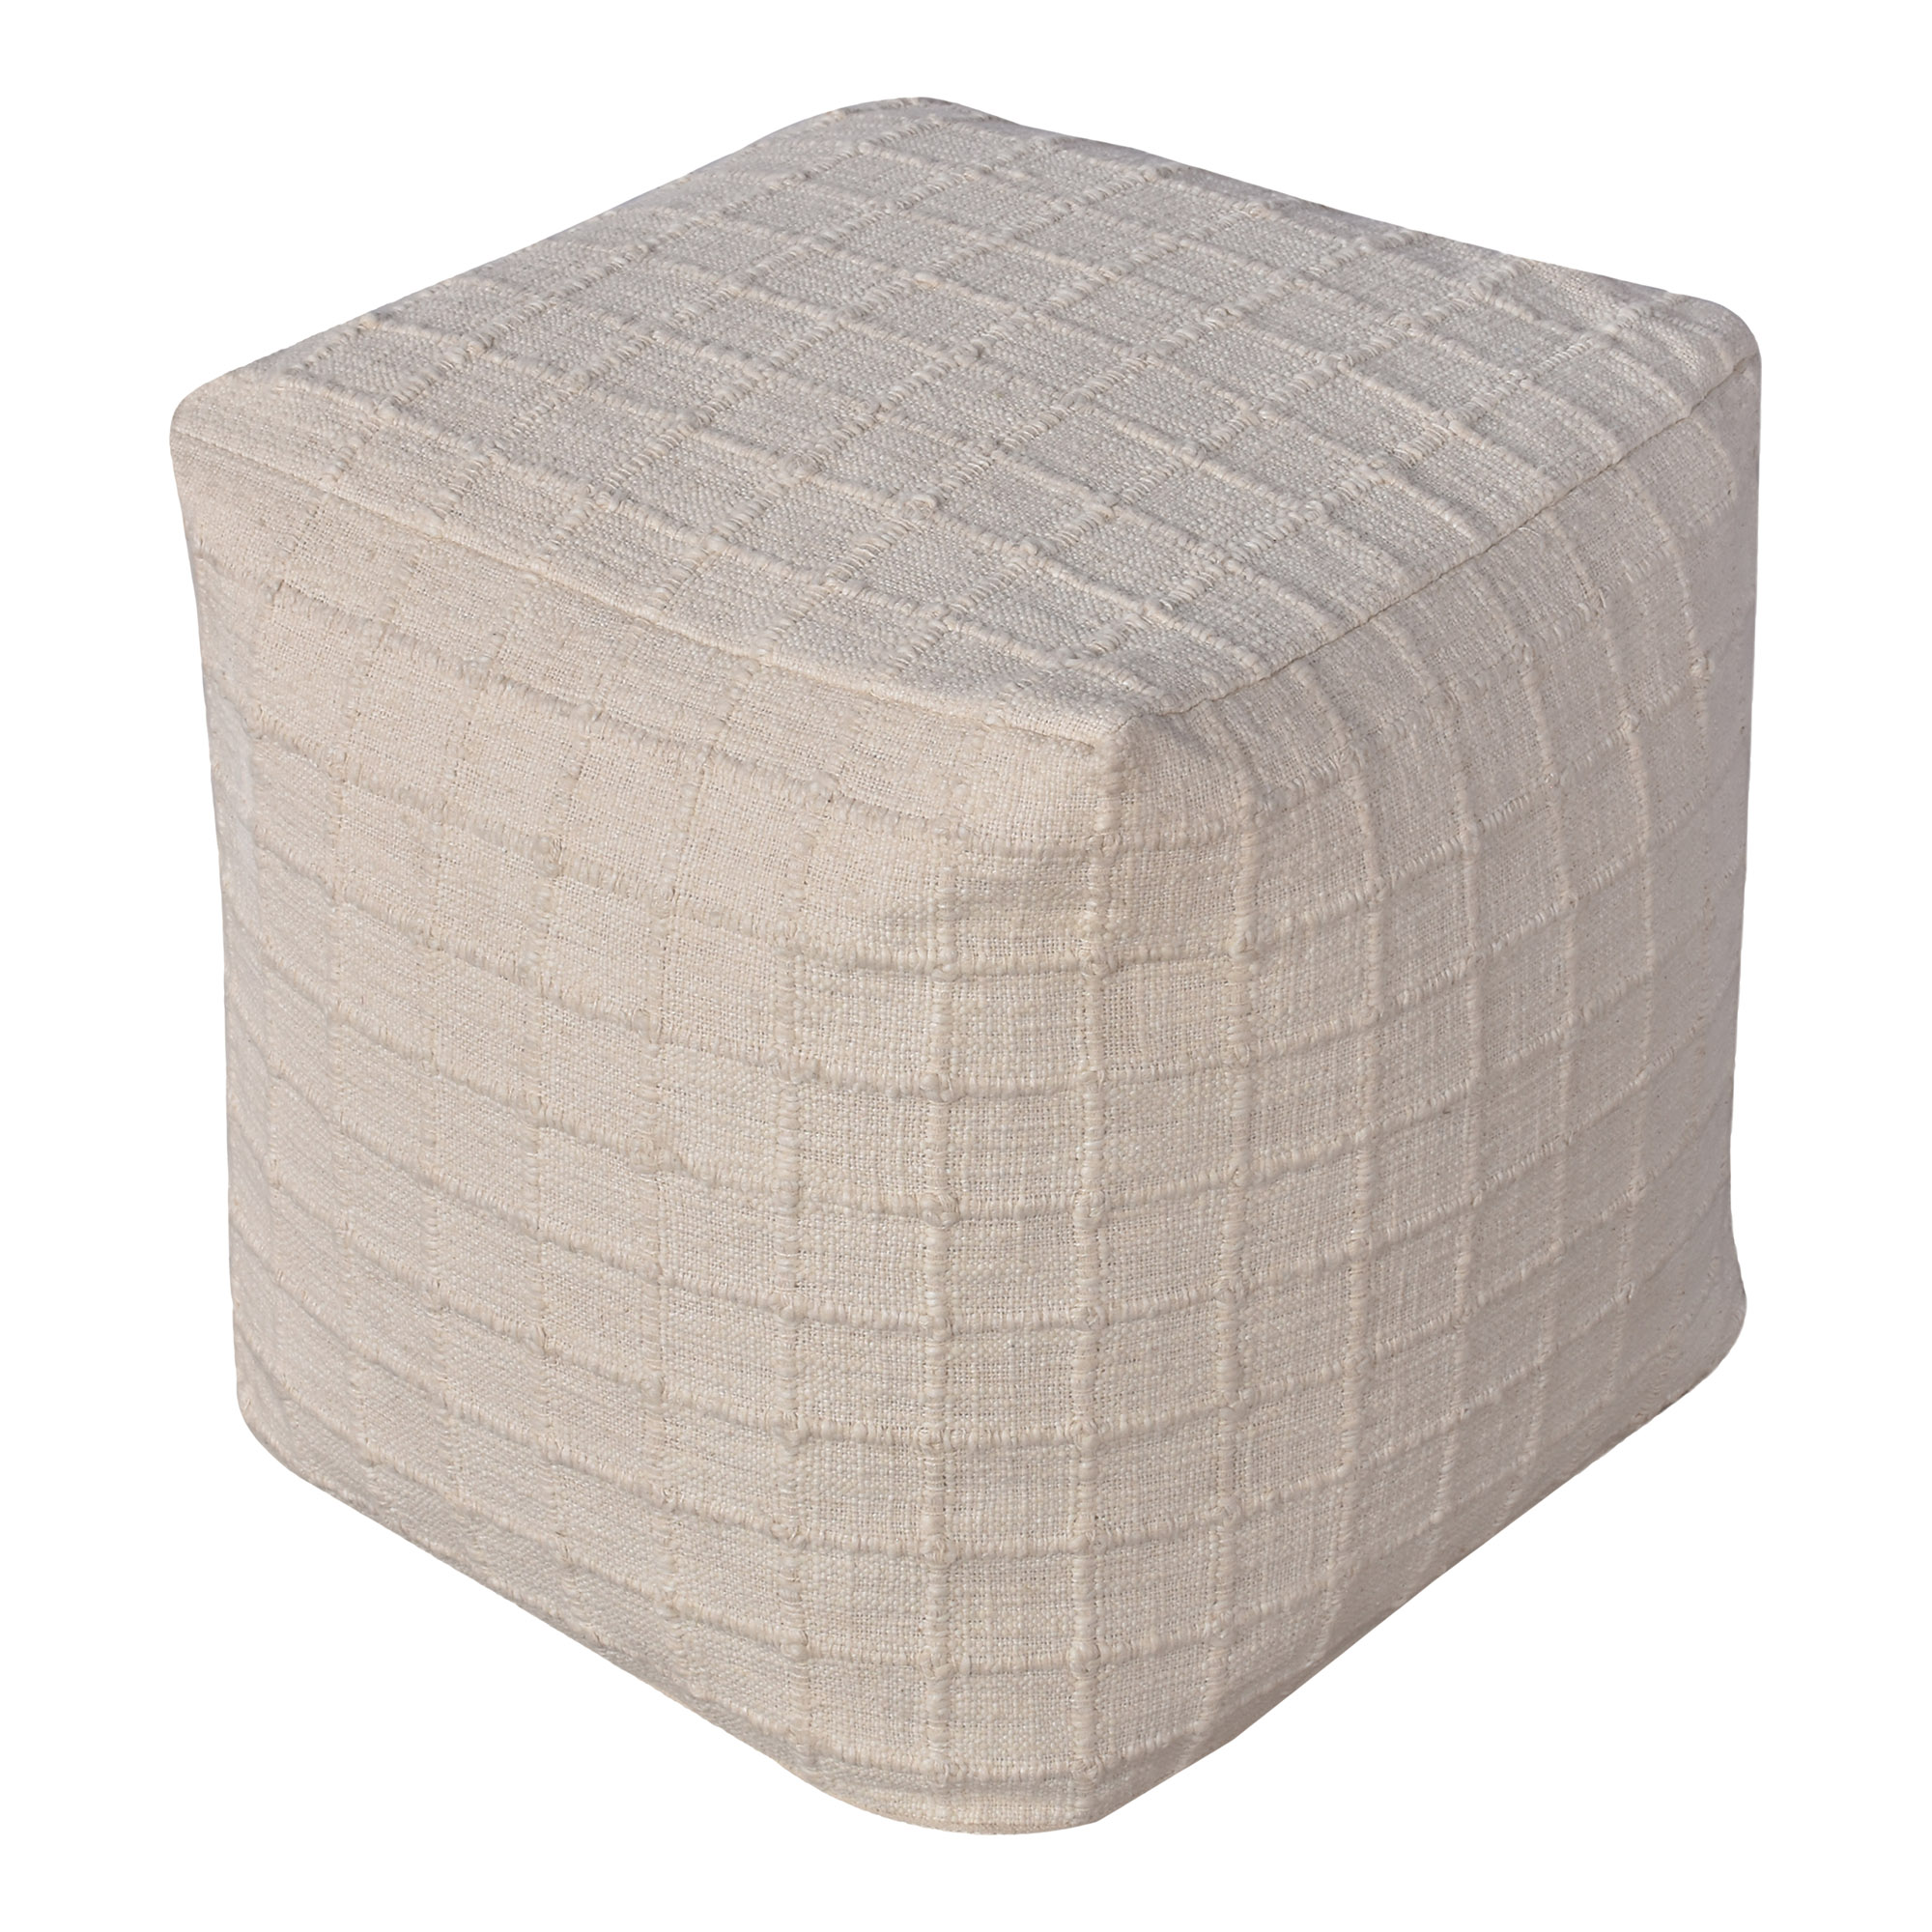 HOUSE NORDIC Guna puf, håndvævet, kvadratisk - råhvid stof (40x40)